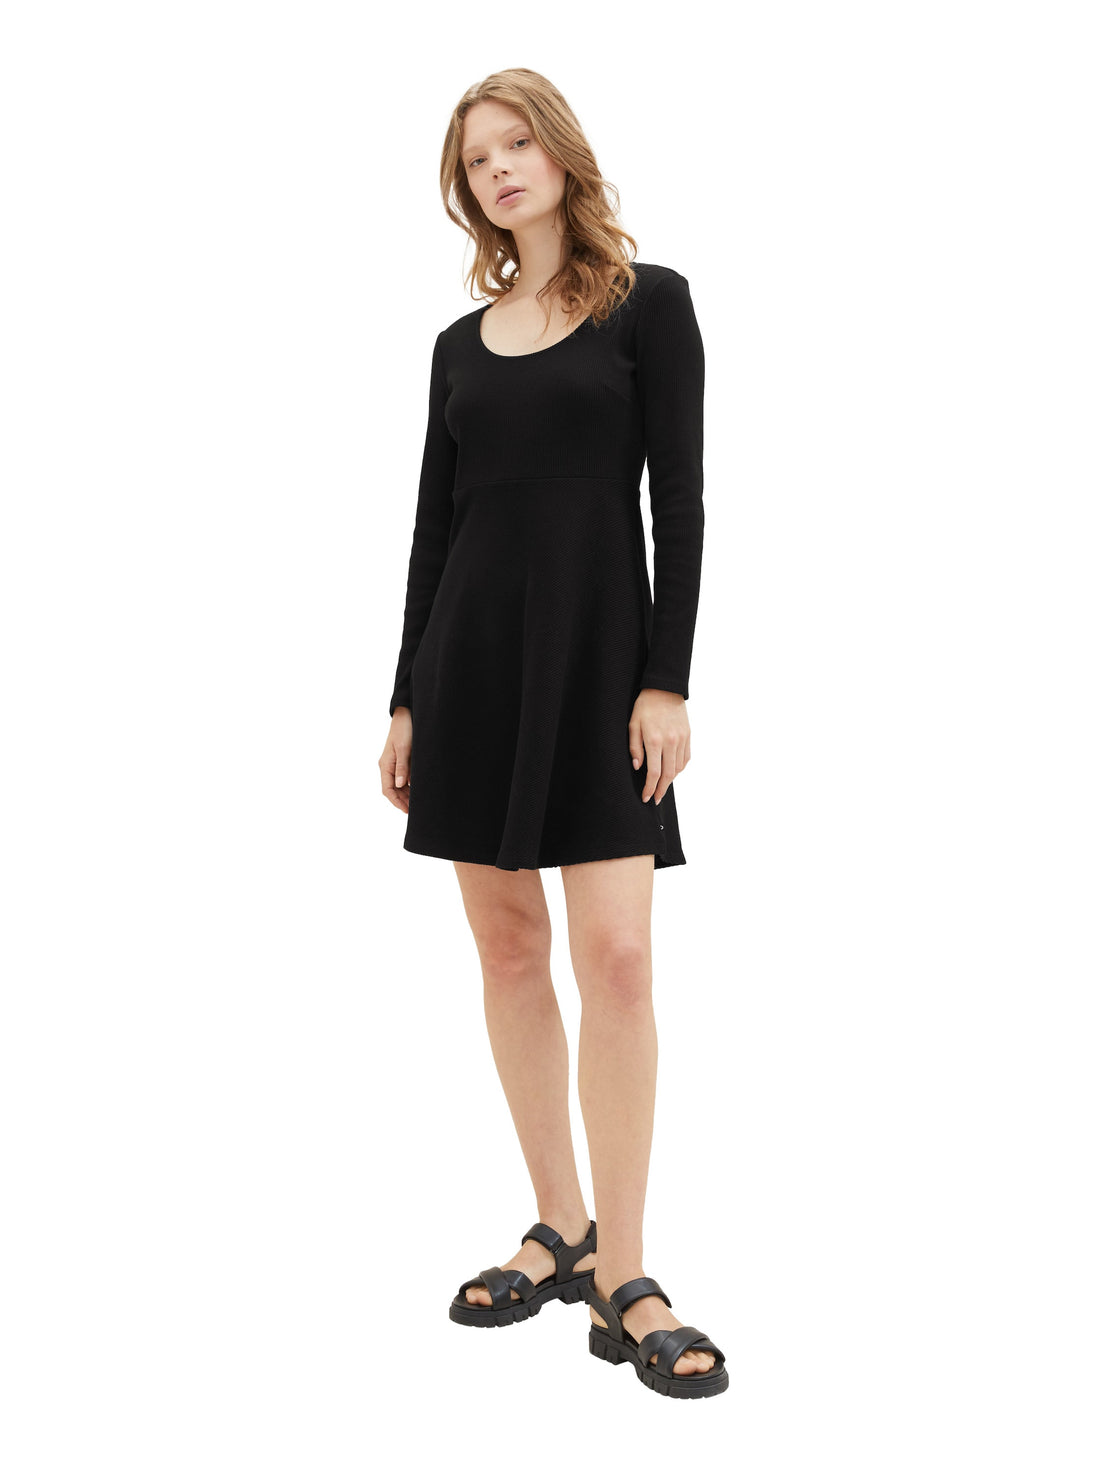 Long Sleeve Short Dress With Round Neckline_1038134_14482_03